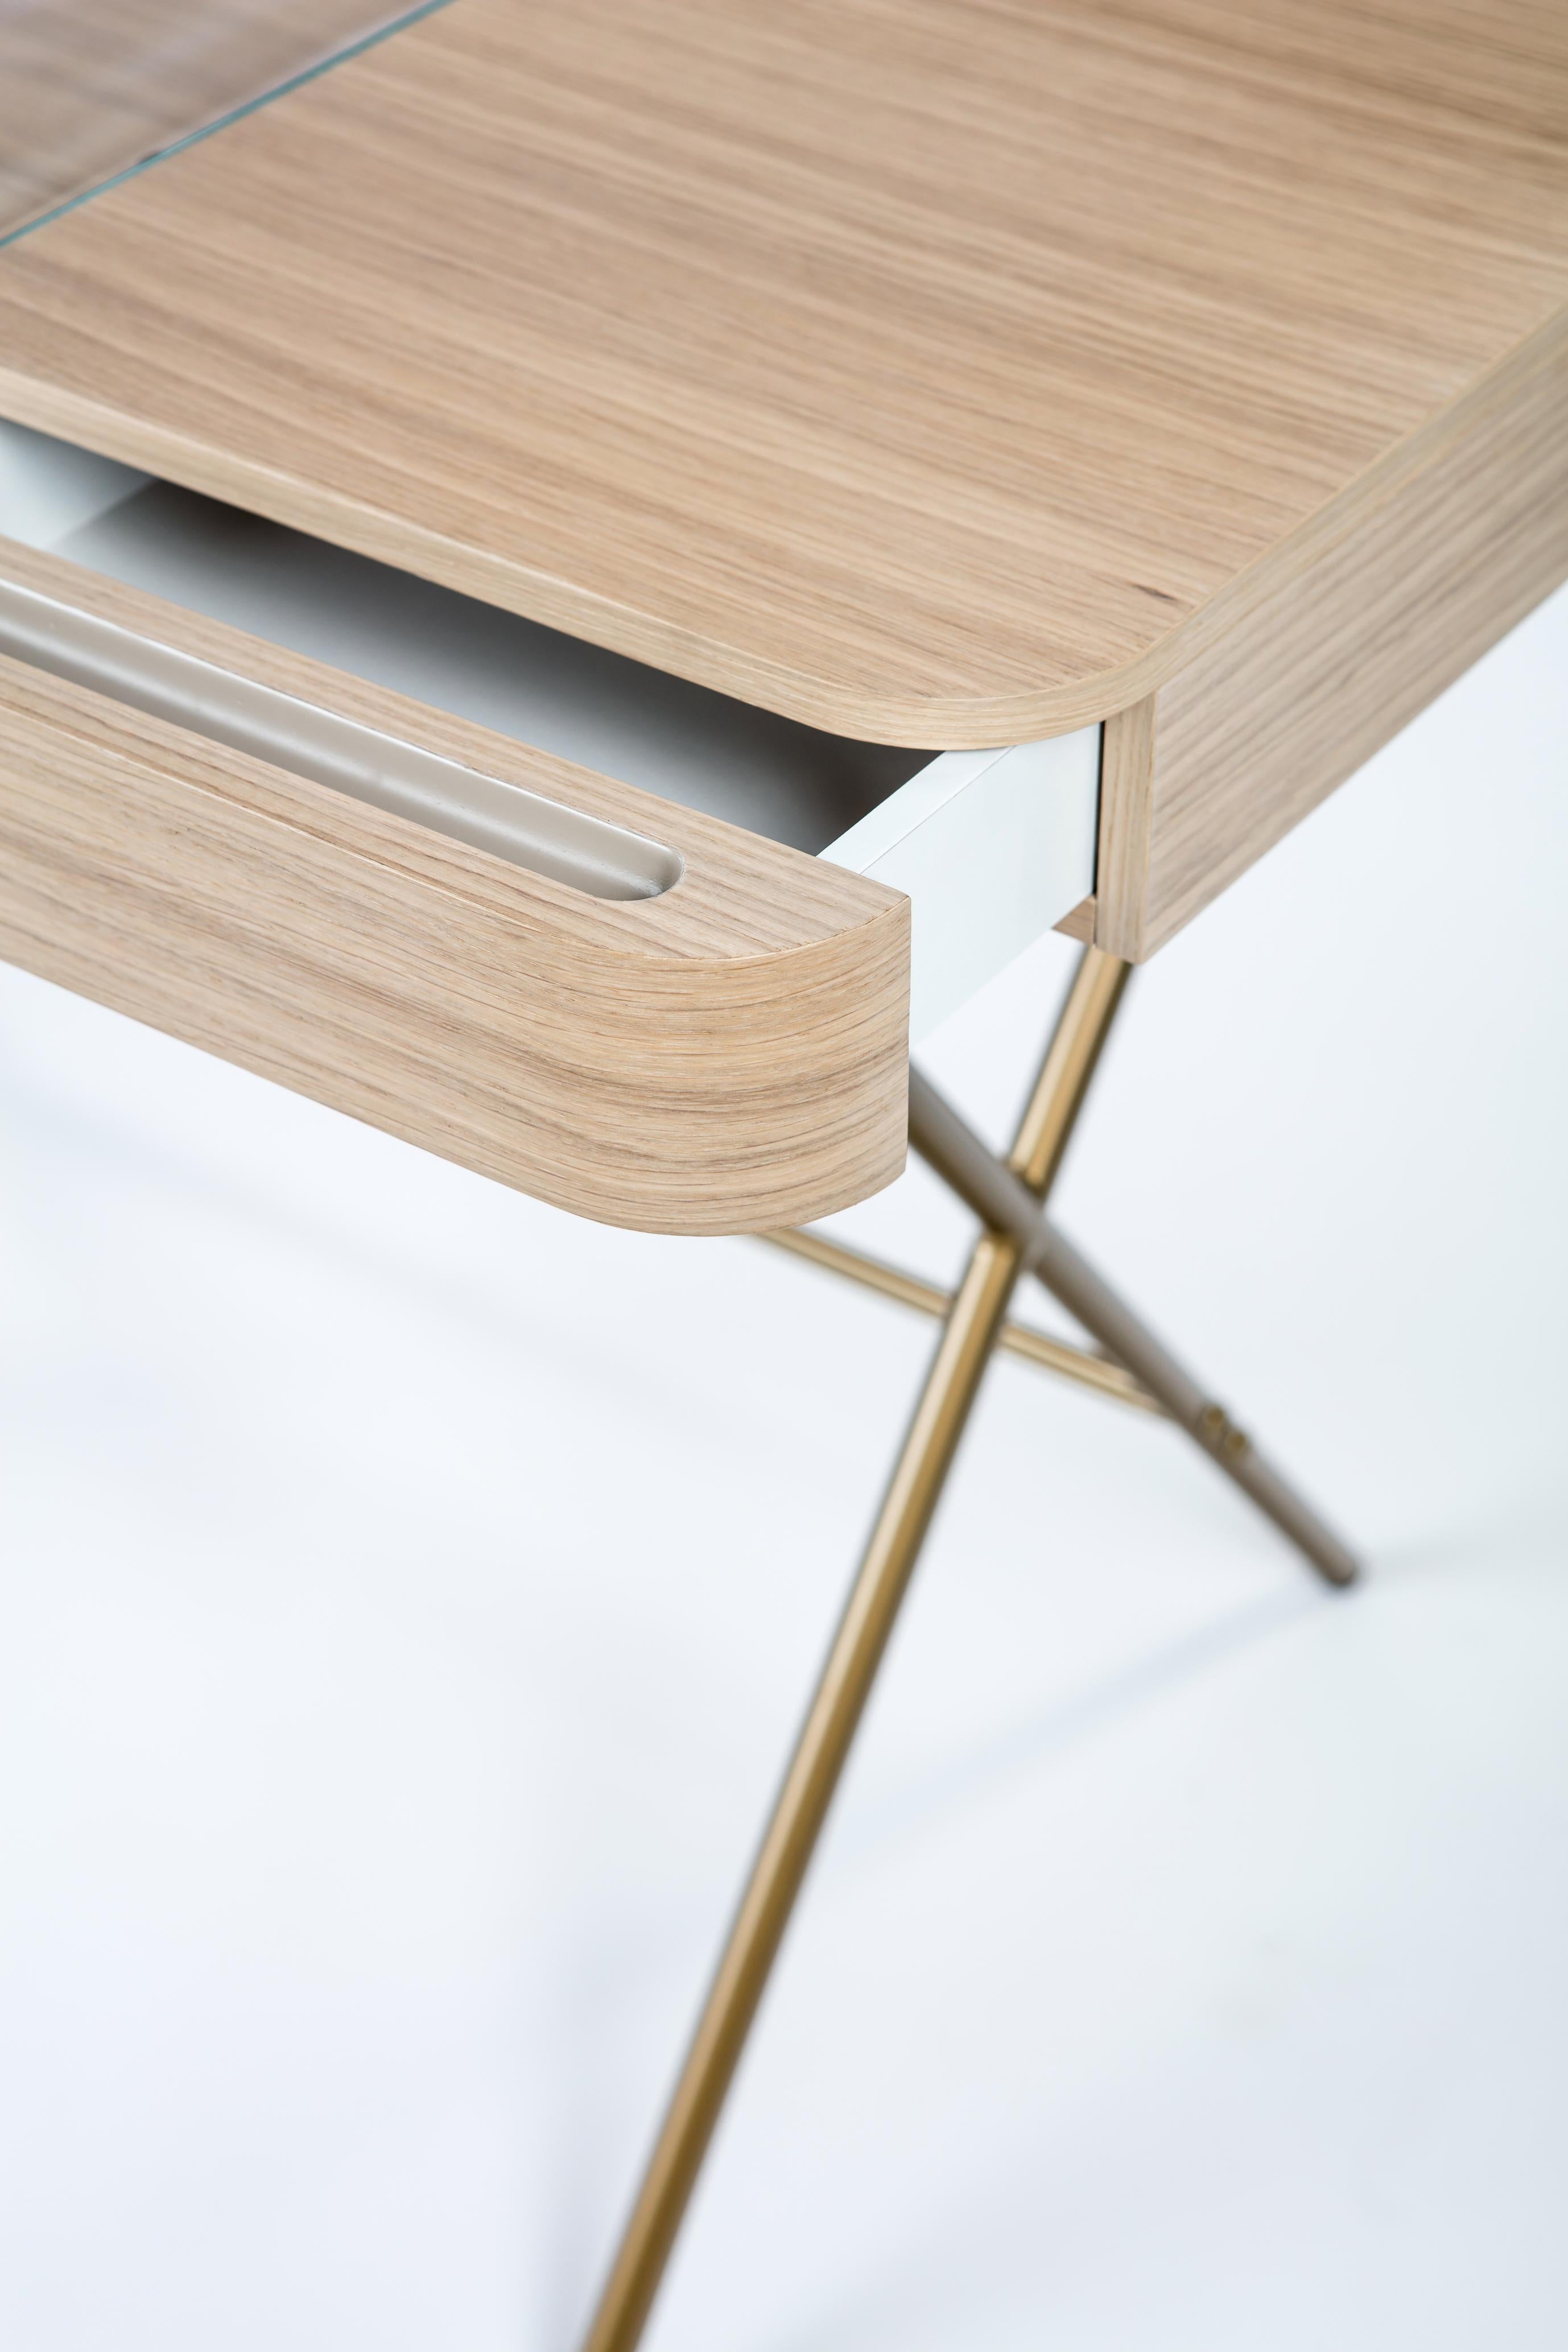 Contemporary Adentro Cosimo Desk design Marco Zanuso jr  Natural oak, glass & golden base.  For Sale